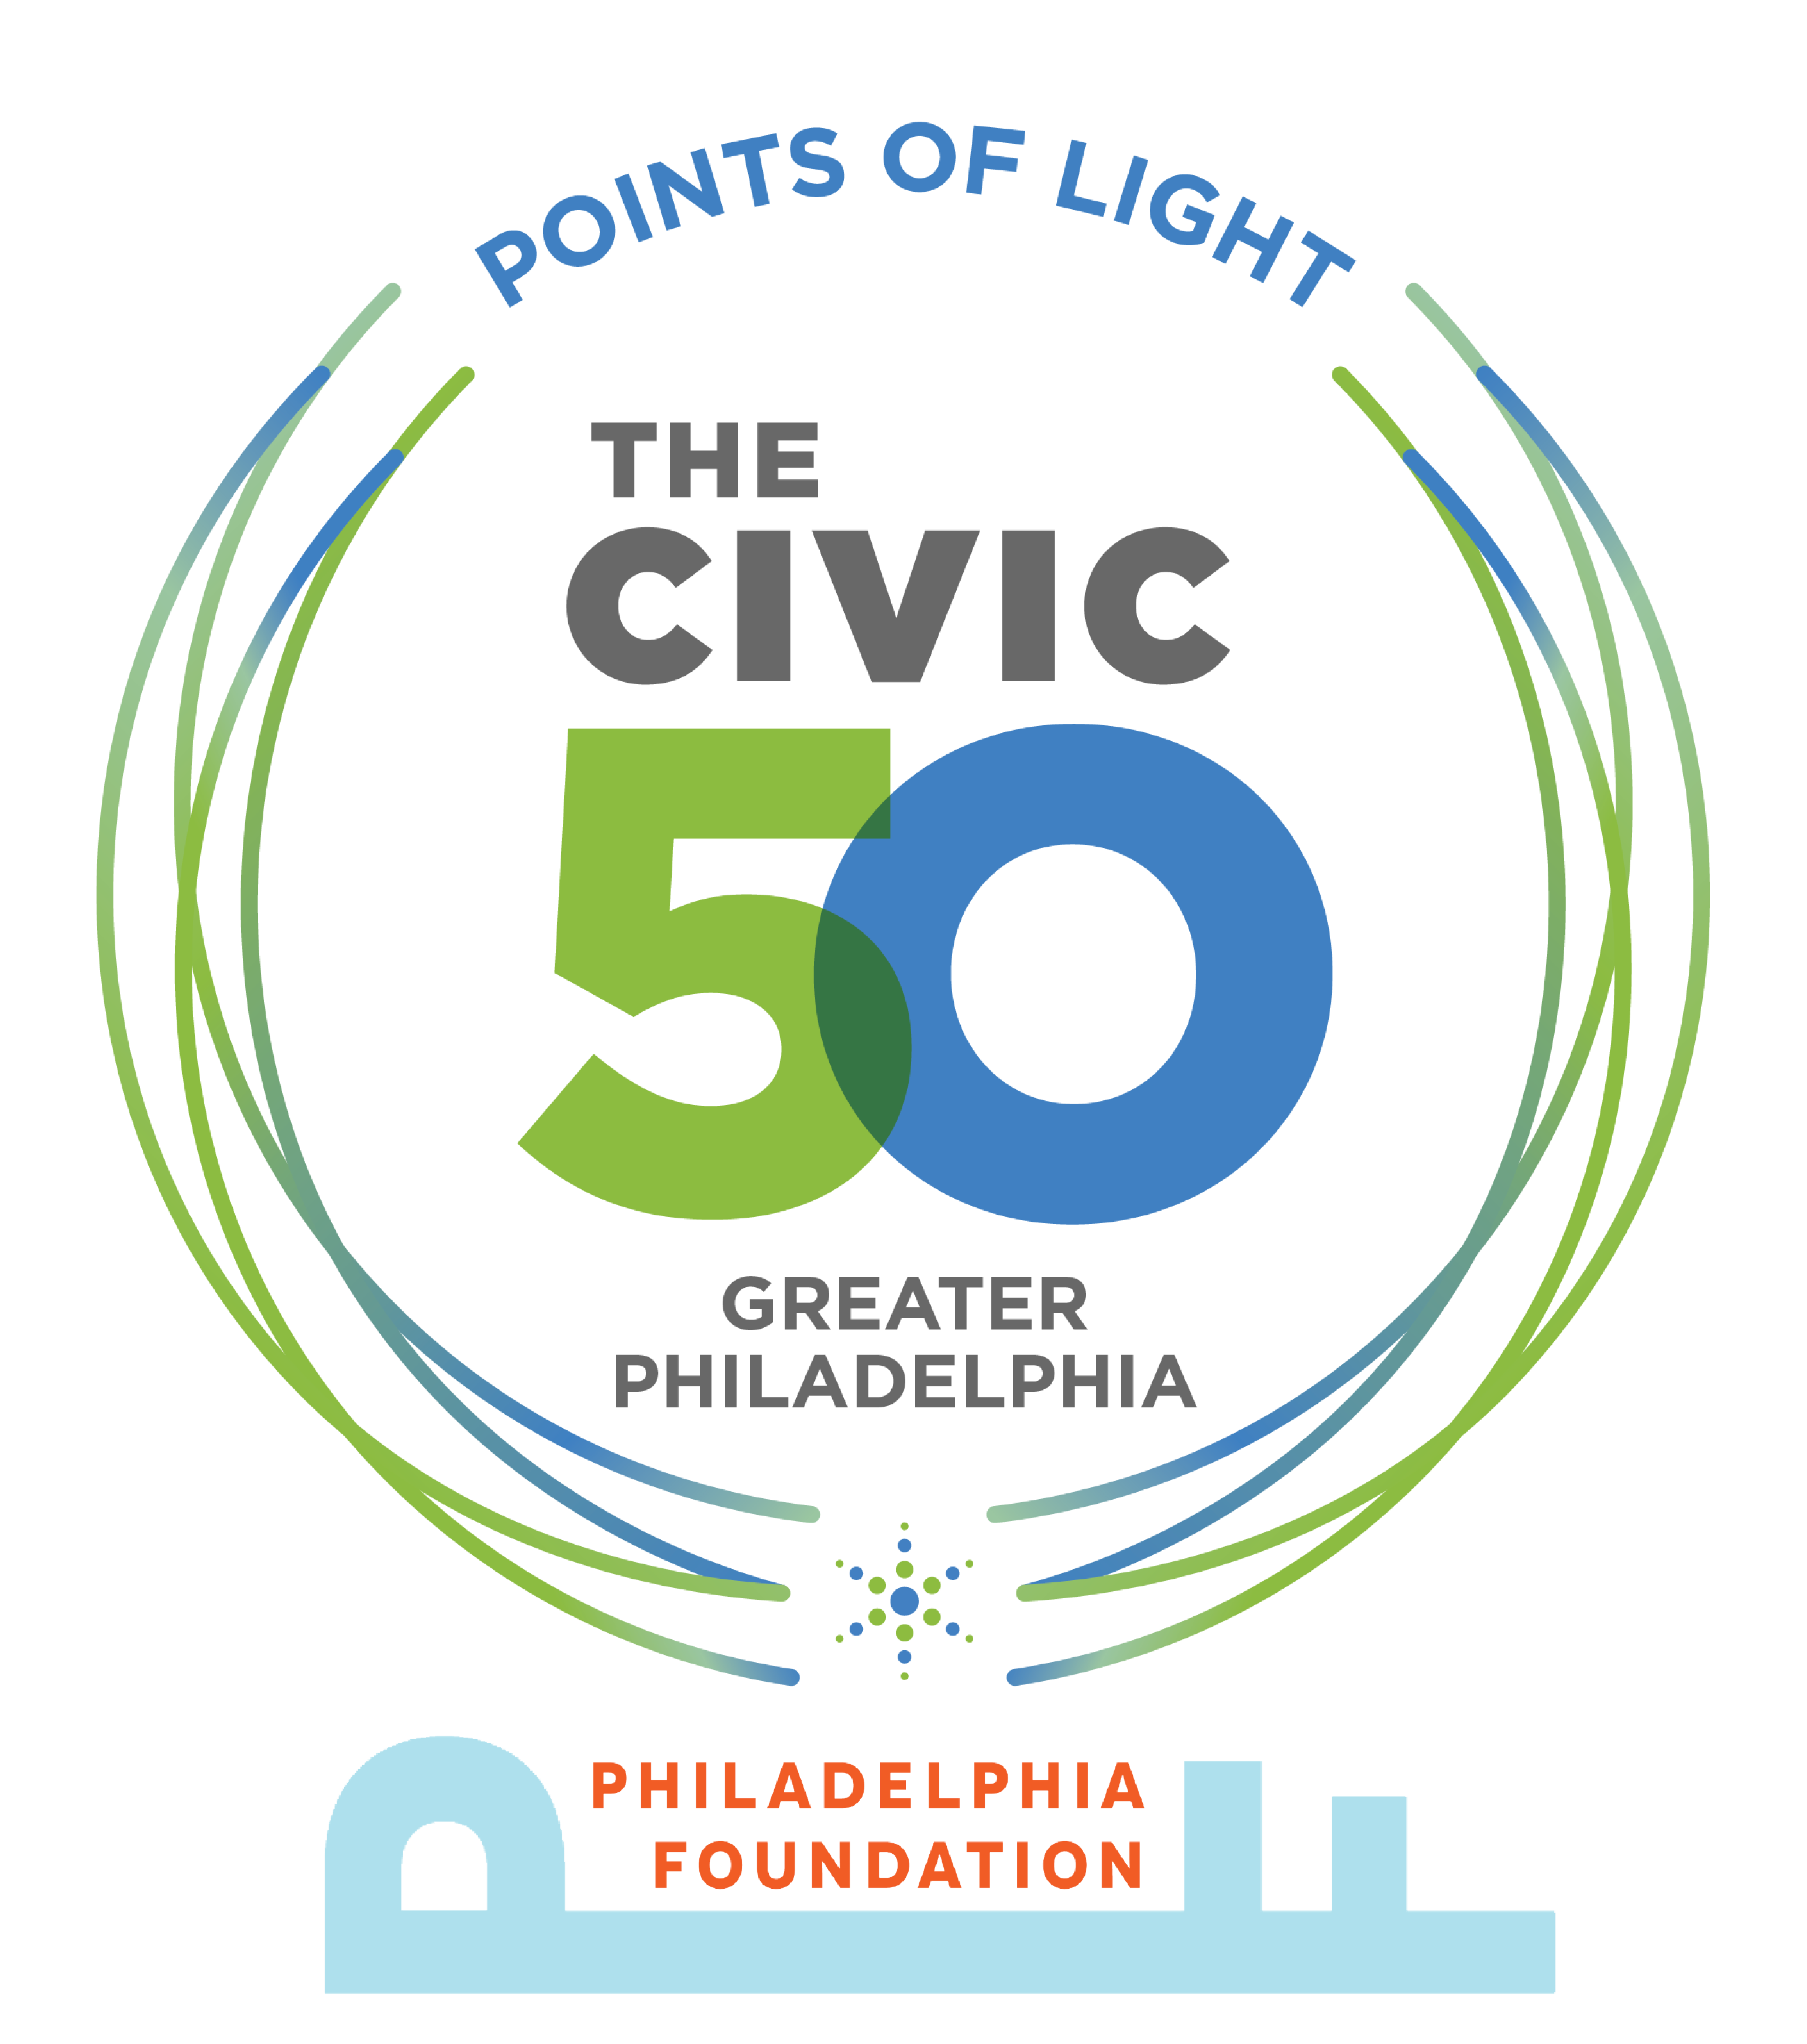 Civic 50 Greater Philadelphia